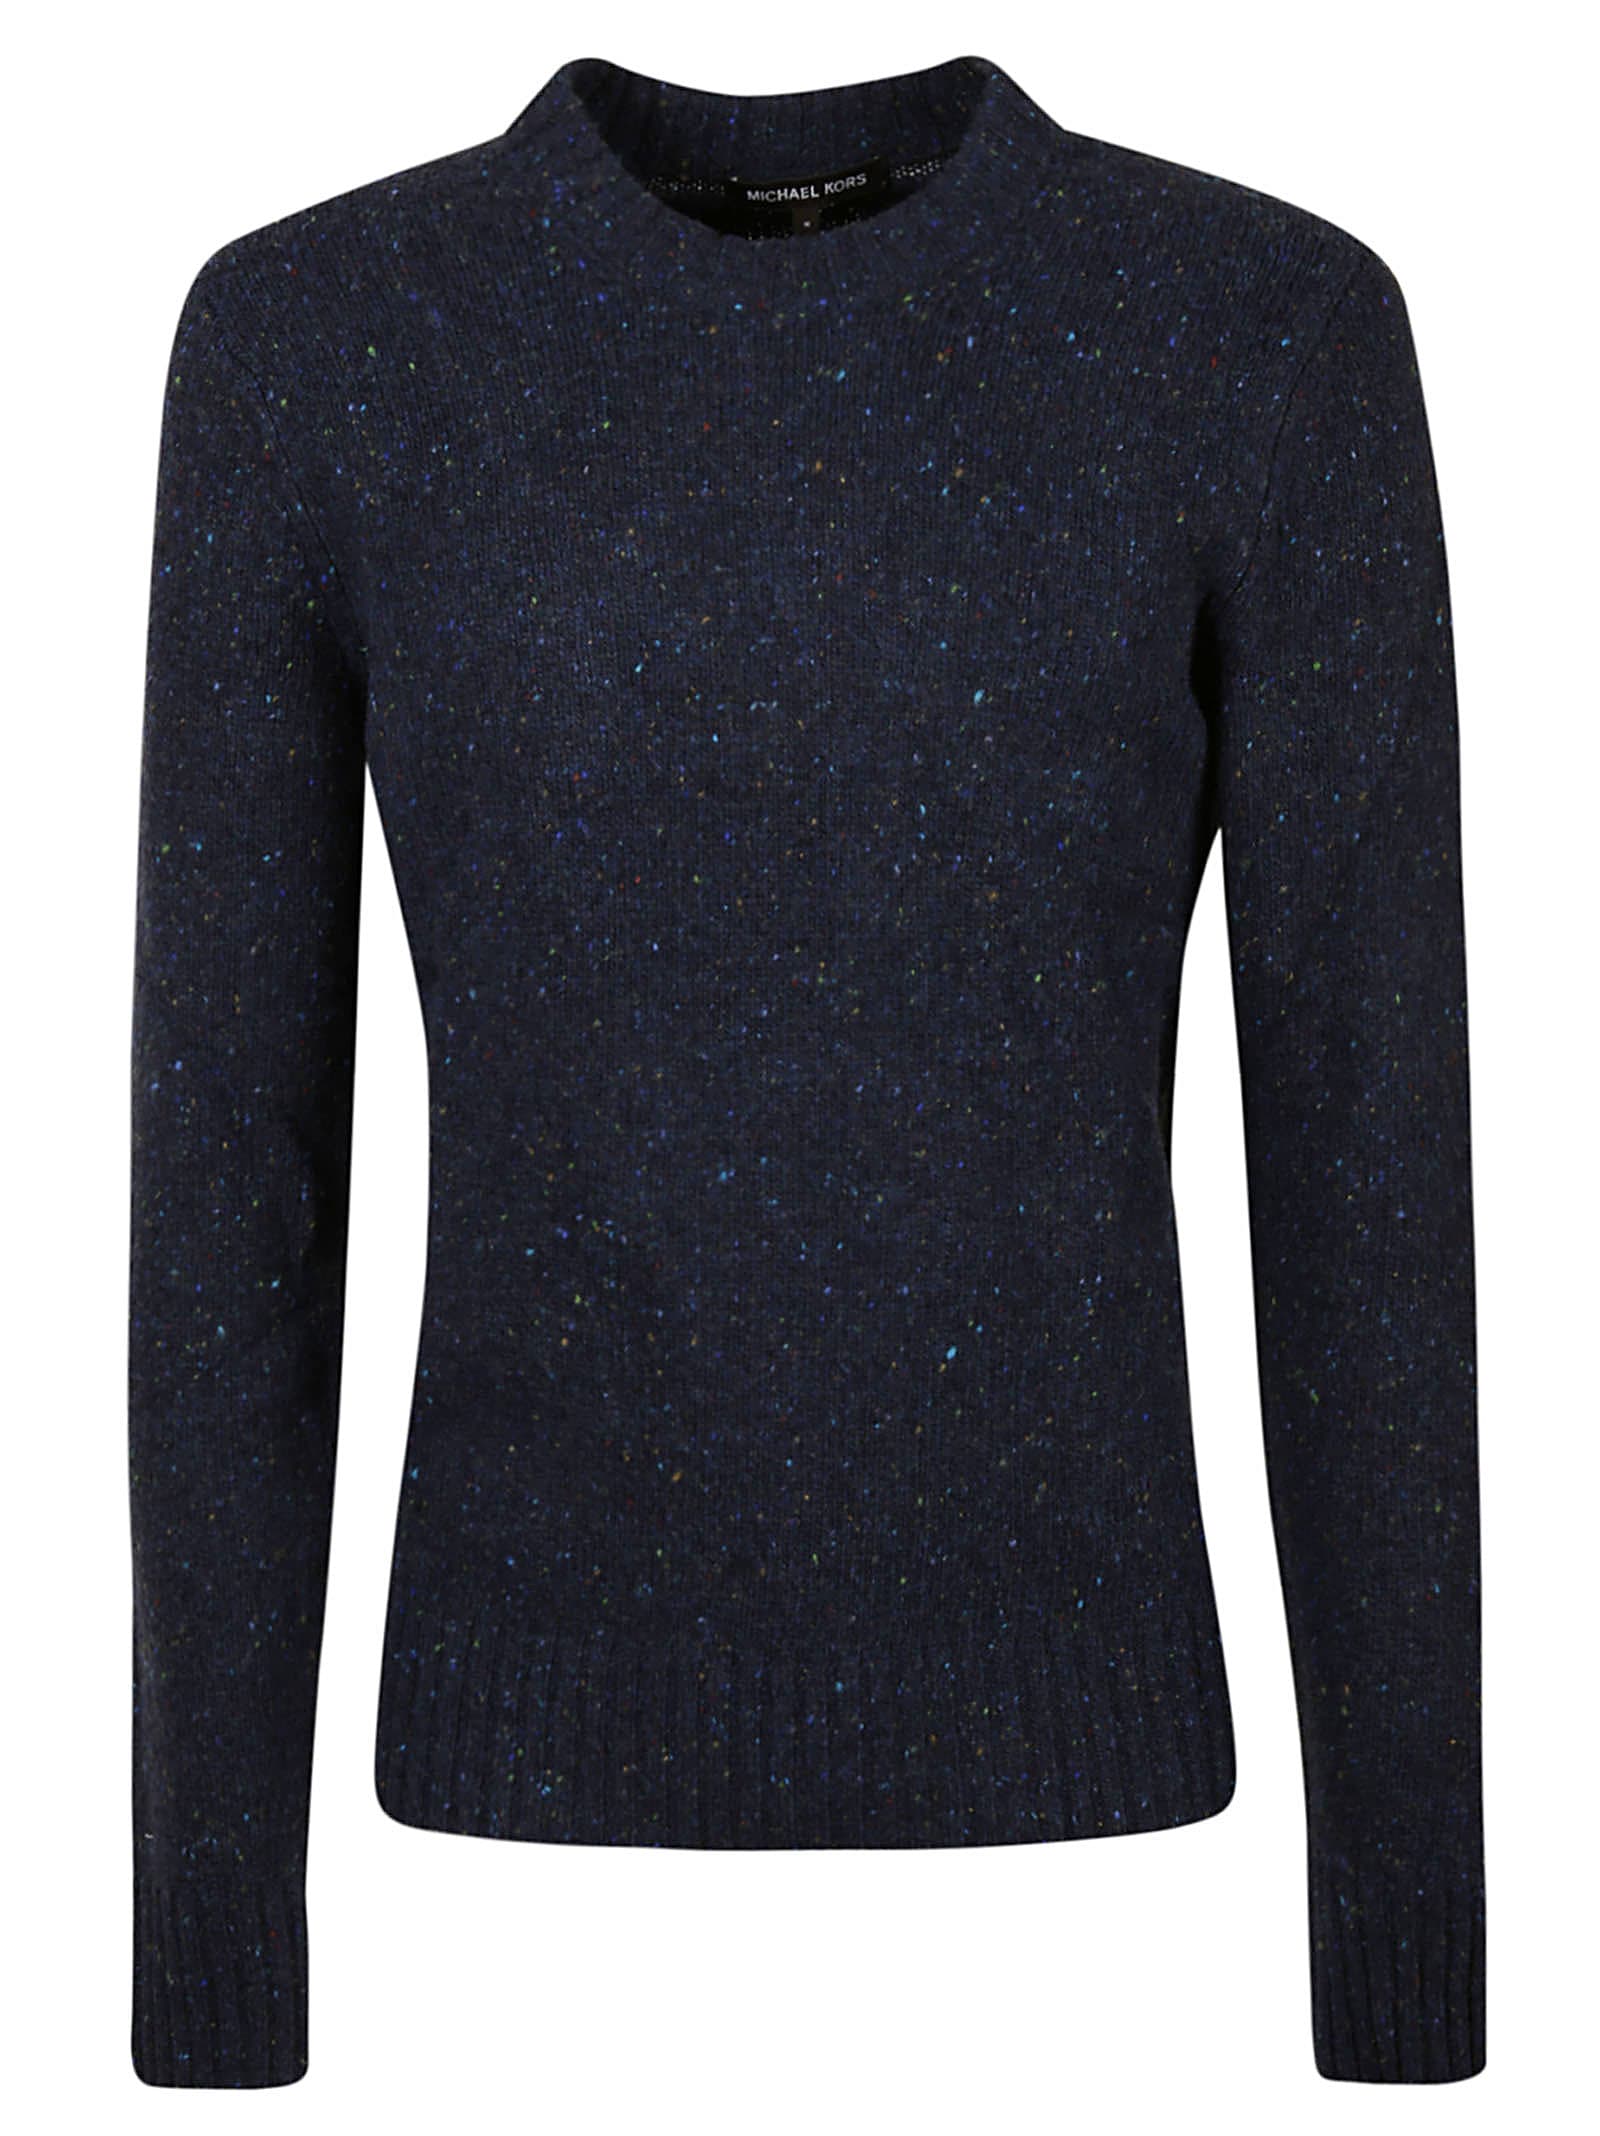 Michael Kors Glittery Sweater